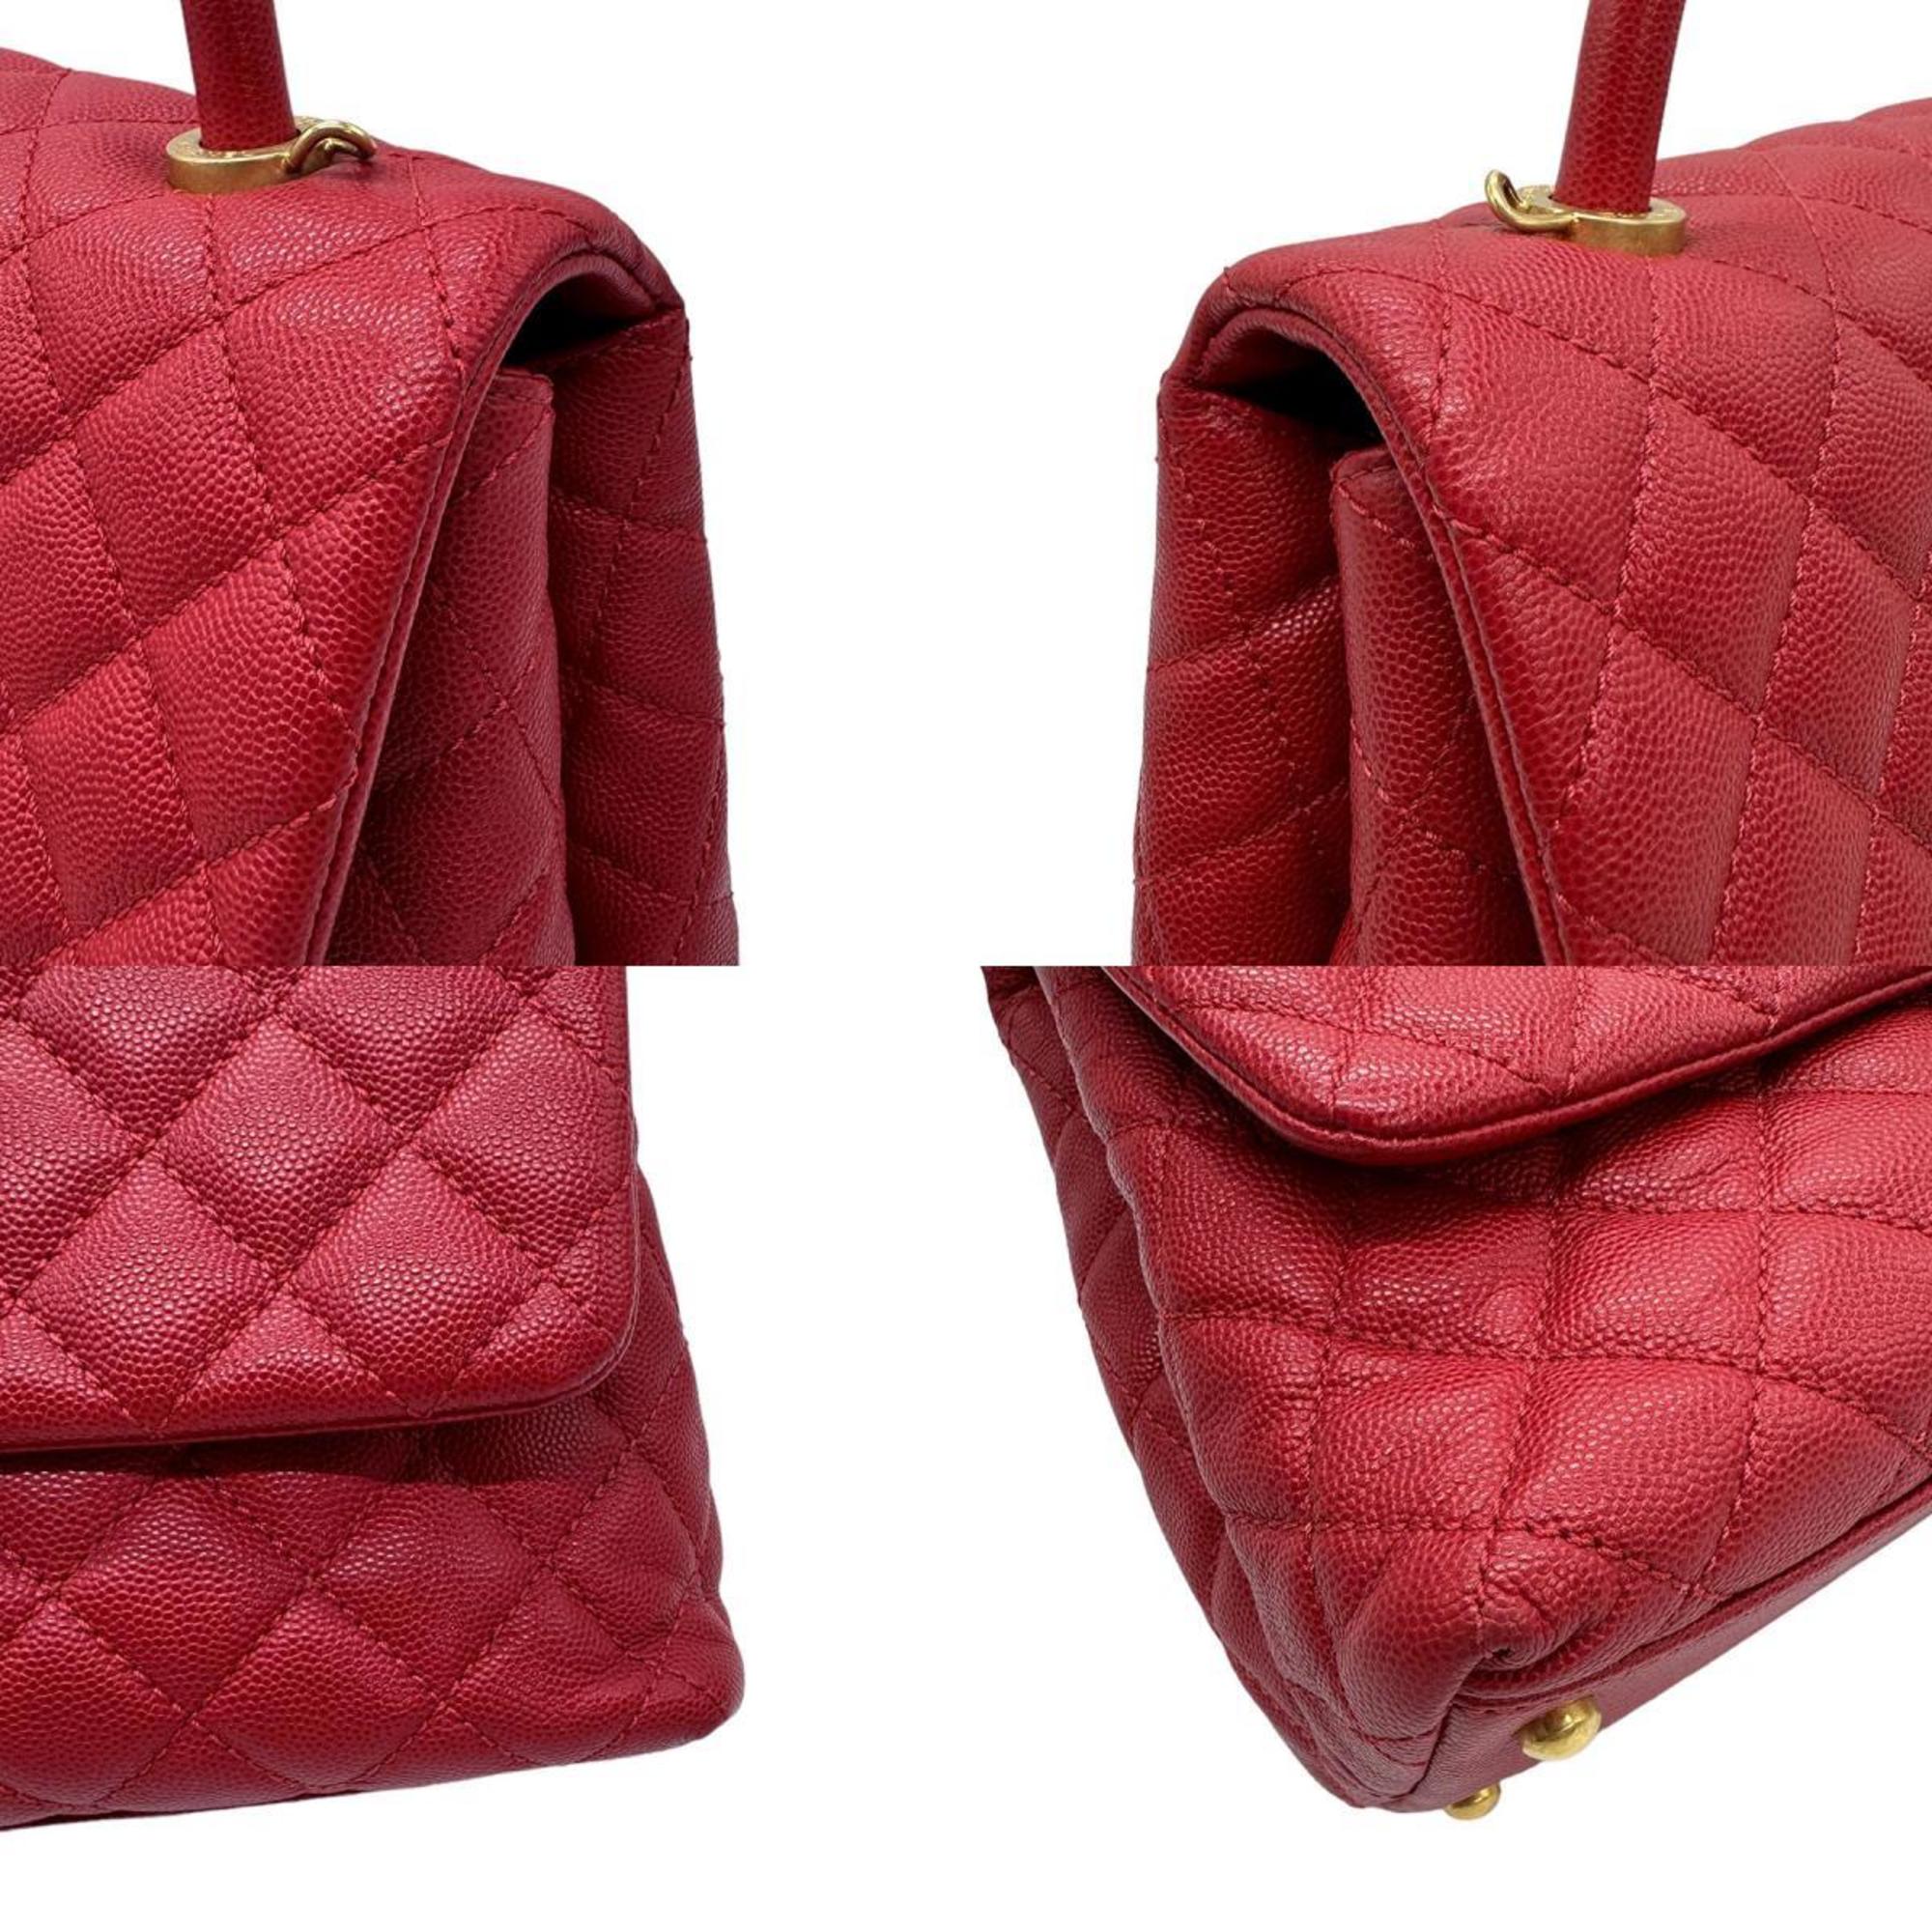 CHANEL Handbag Shoulder Bag Coco Handle 29 Caviar Skin Leather Red Women's z0578